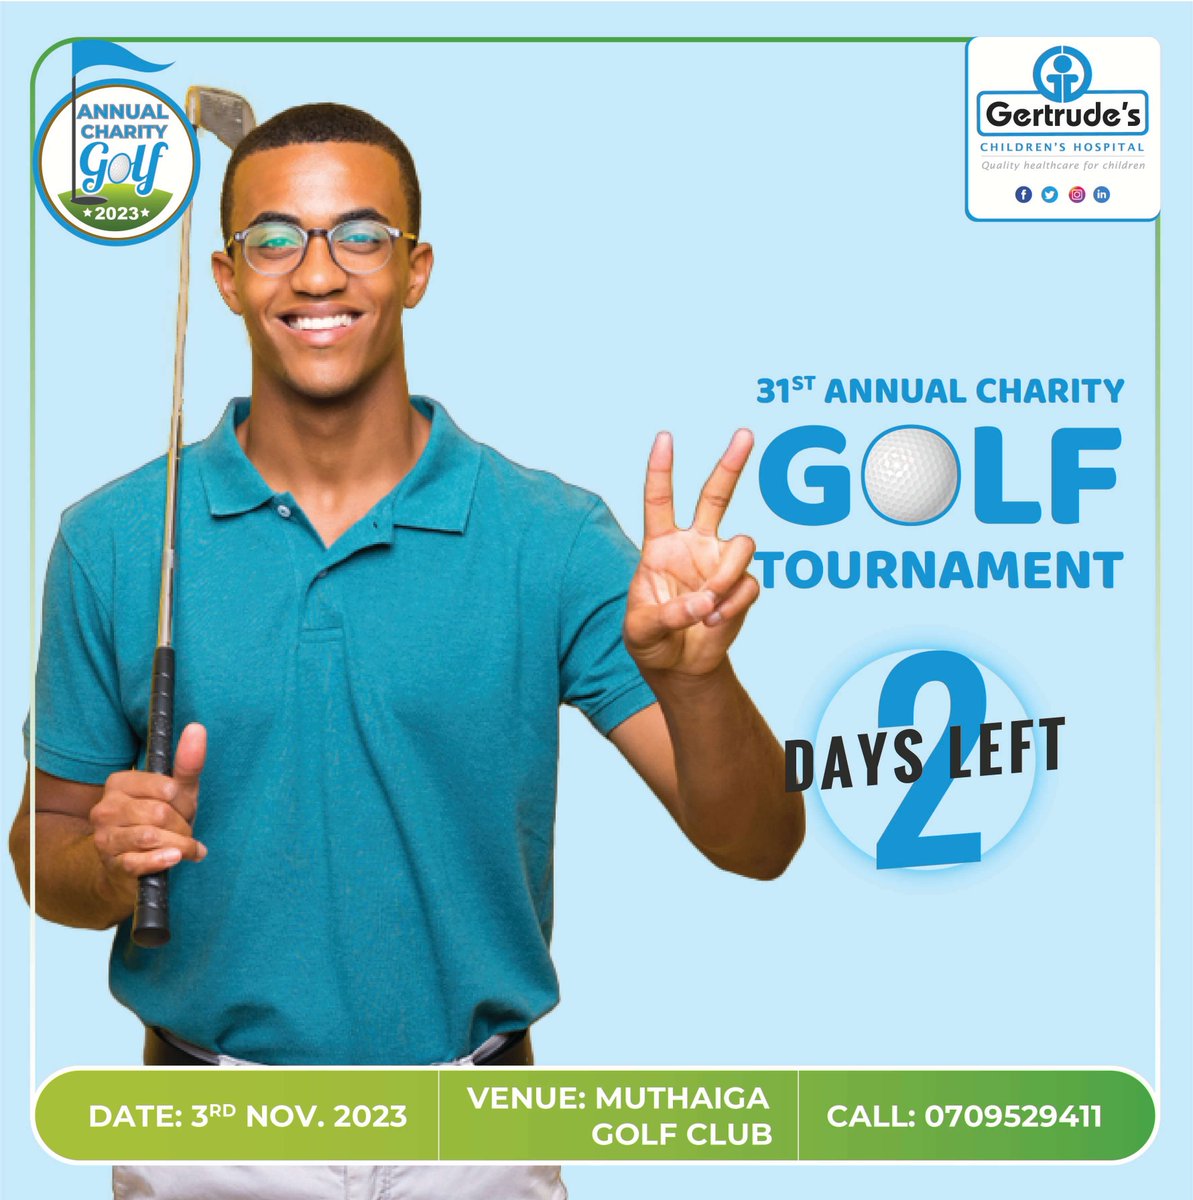 Just 2 days left until our Golf Tournament! Your participation can change lives. 🌟 #GertrudesGolfTournament2023 #GertrudesKe #UlizaDaktari